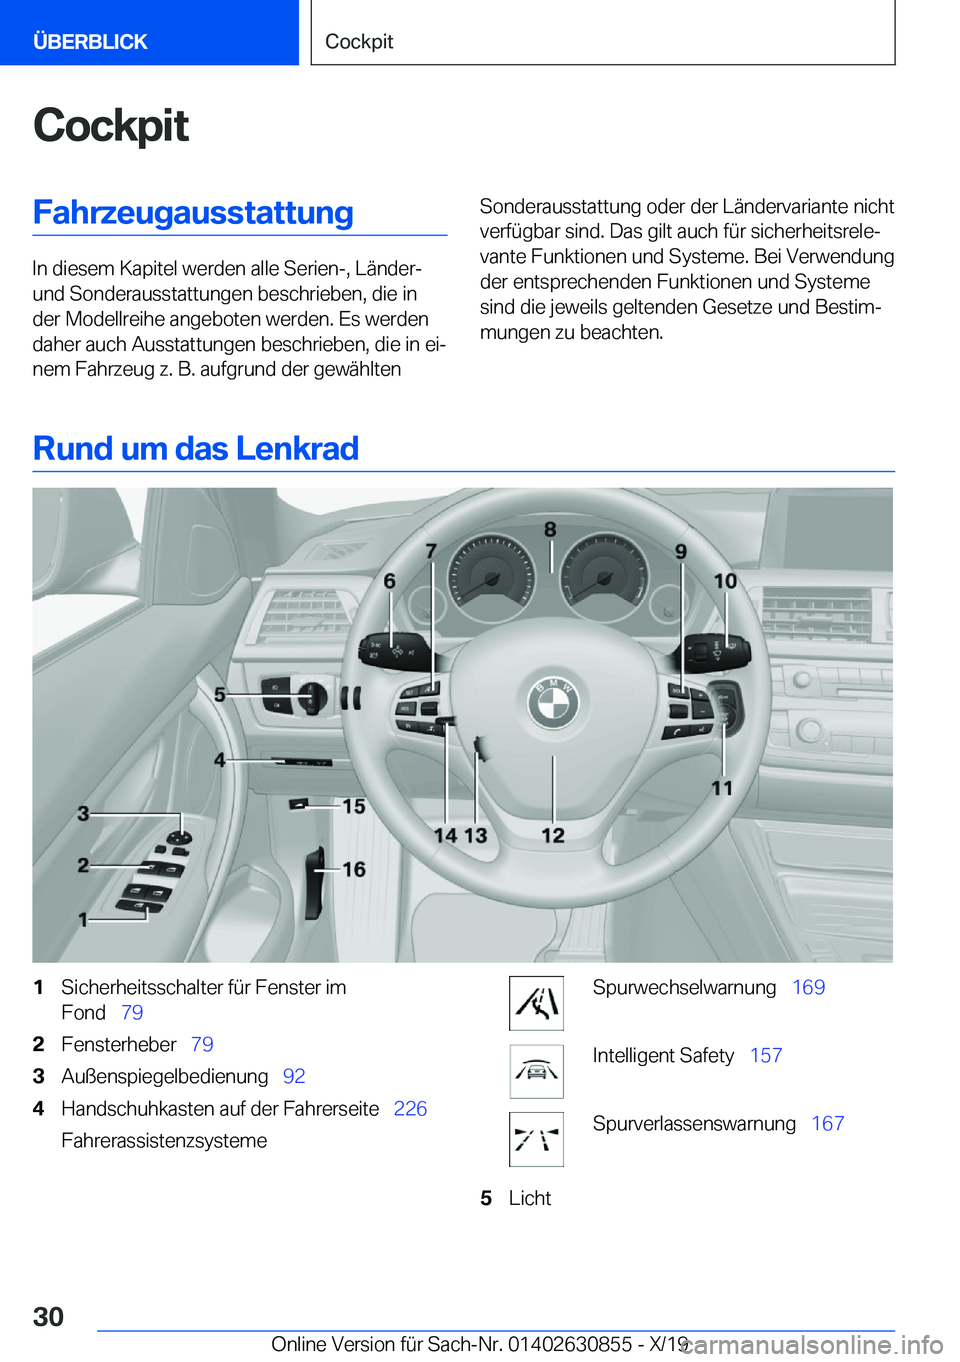 BMW 4 SERIES GRAN COUPE 2020  Betriebsanleitungen (in German) �C�o�c�k�p�i�t�F�a�h�r�z�e�u�g�a�u�s�s�t�a�t�t�u�n�g
�I�n��d�i�e�s�e�m��K�a�p�i�t�e�l��w�e�r�d�e�n��a�l�l�e��S�e�r�i�e�n�-�,��L�